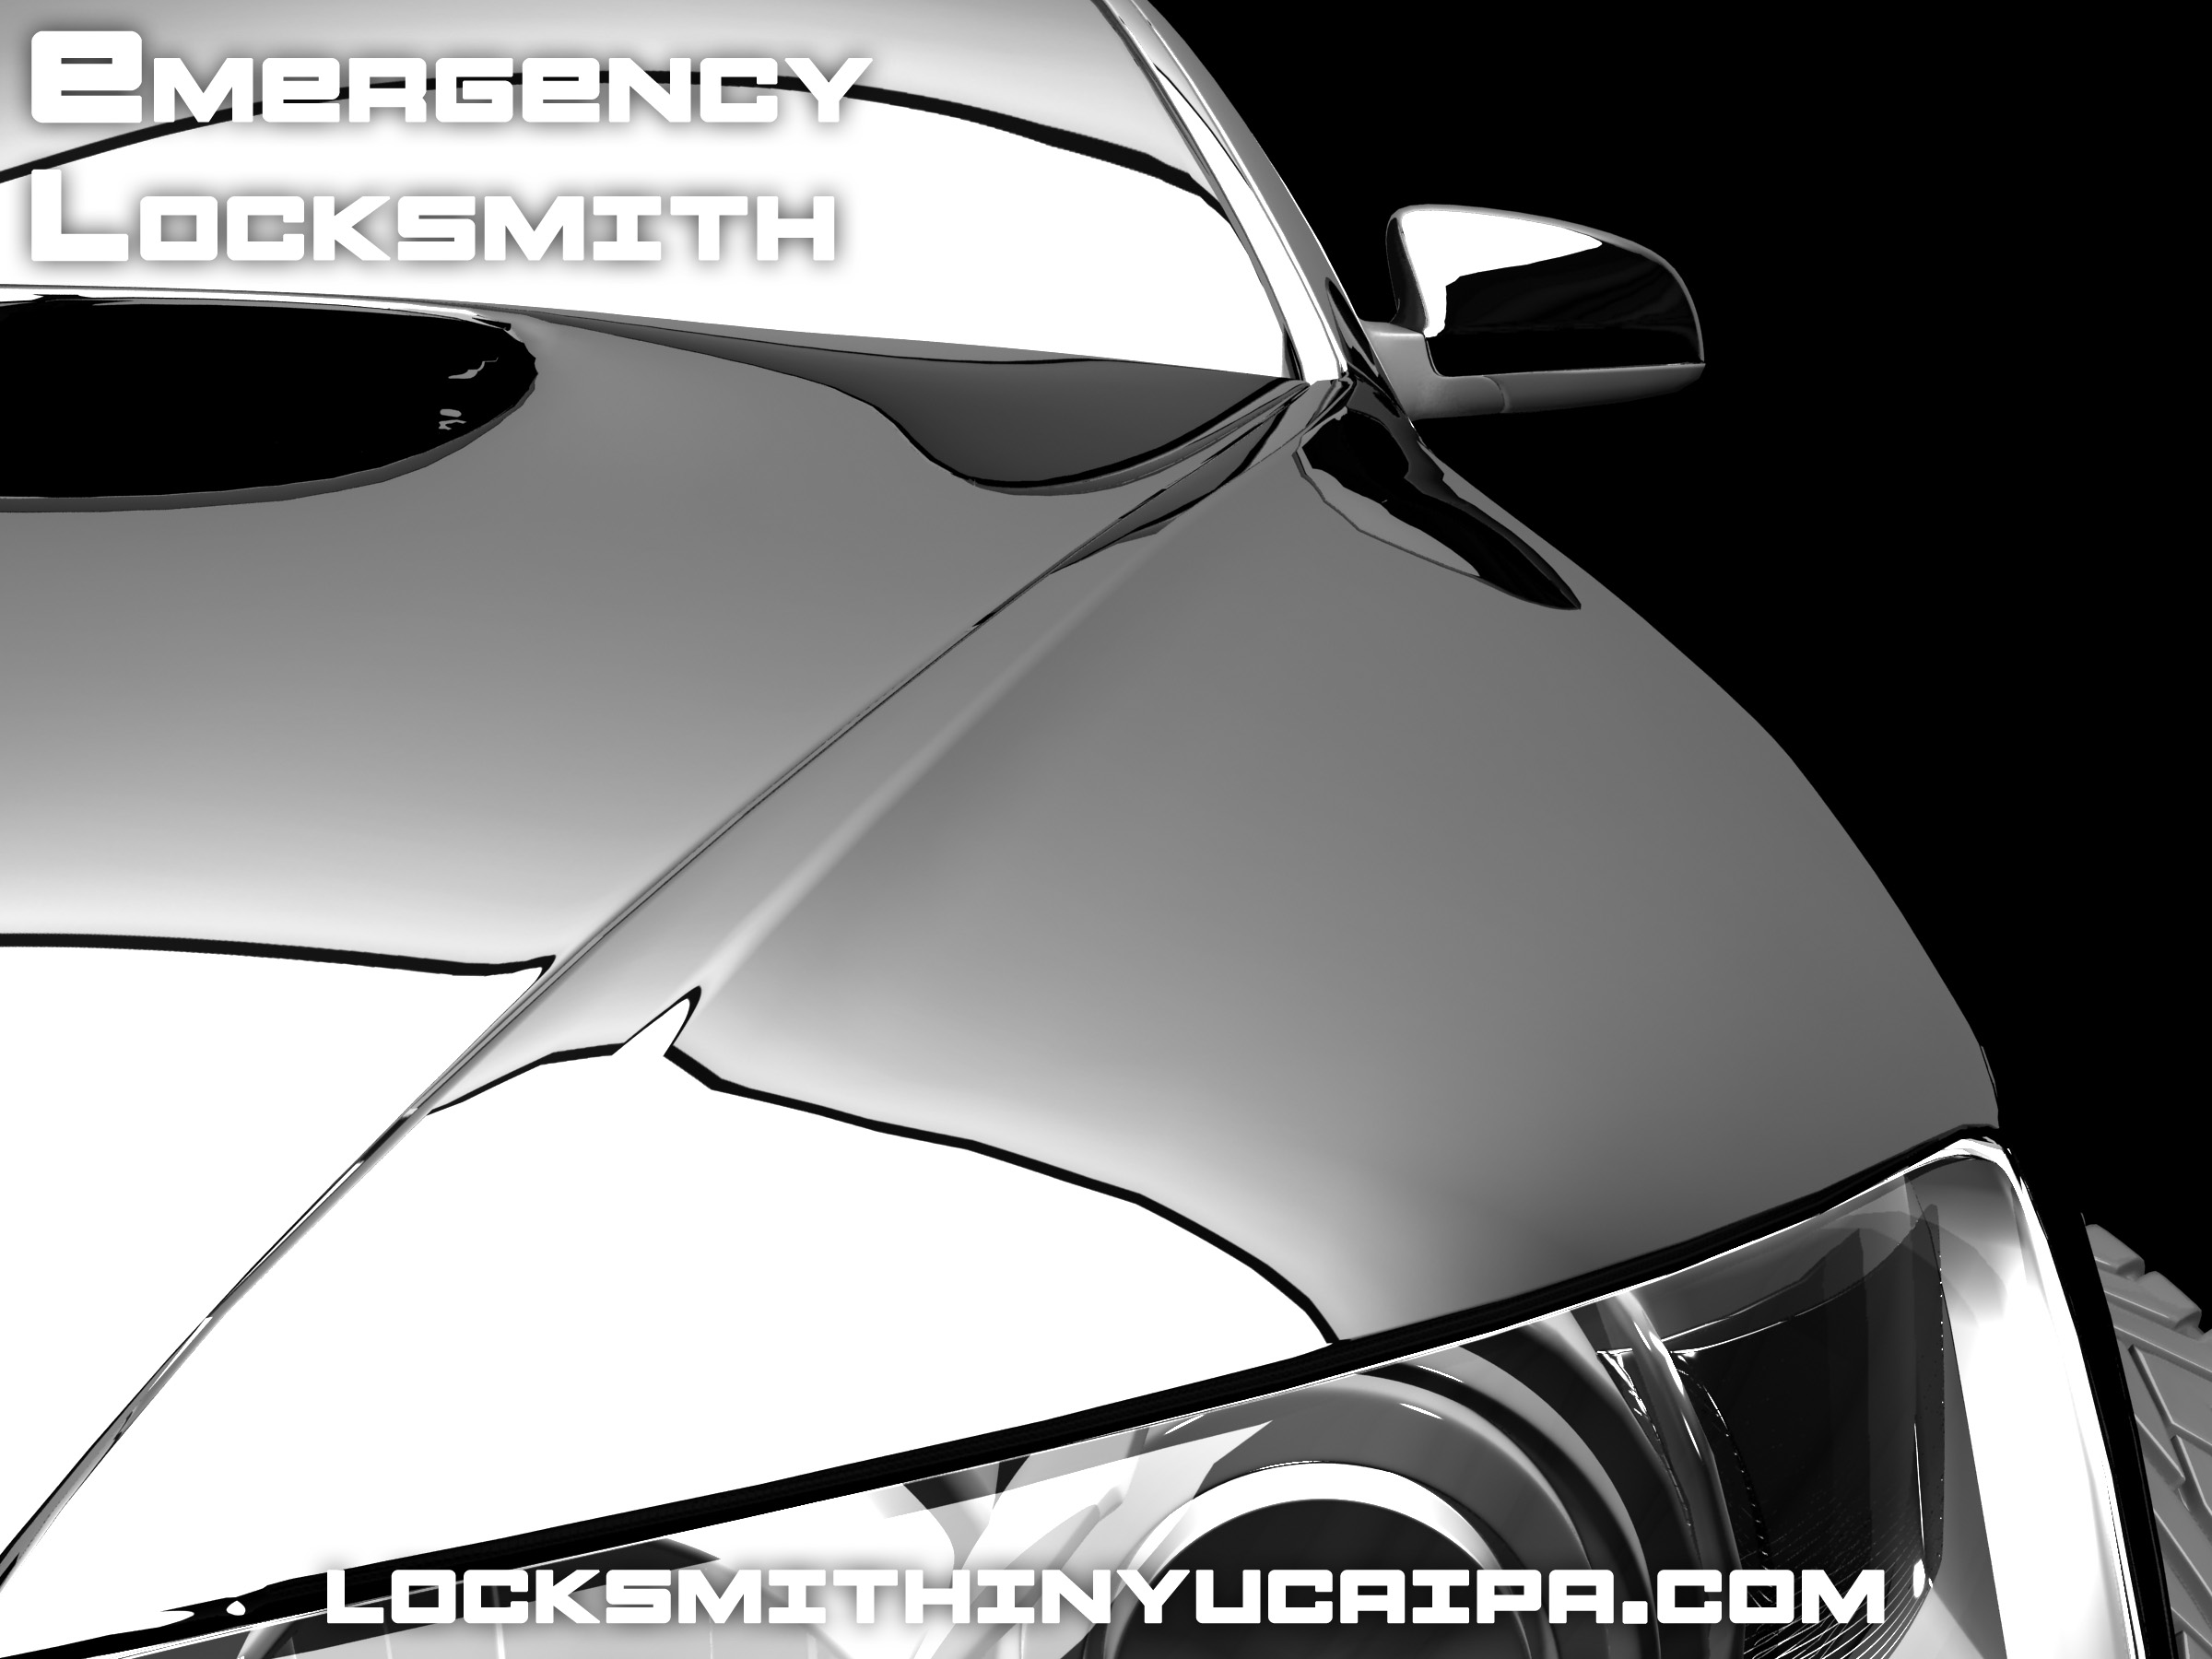 Yucaipa-locksmith-Emergency